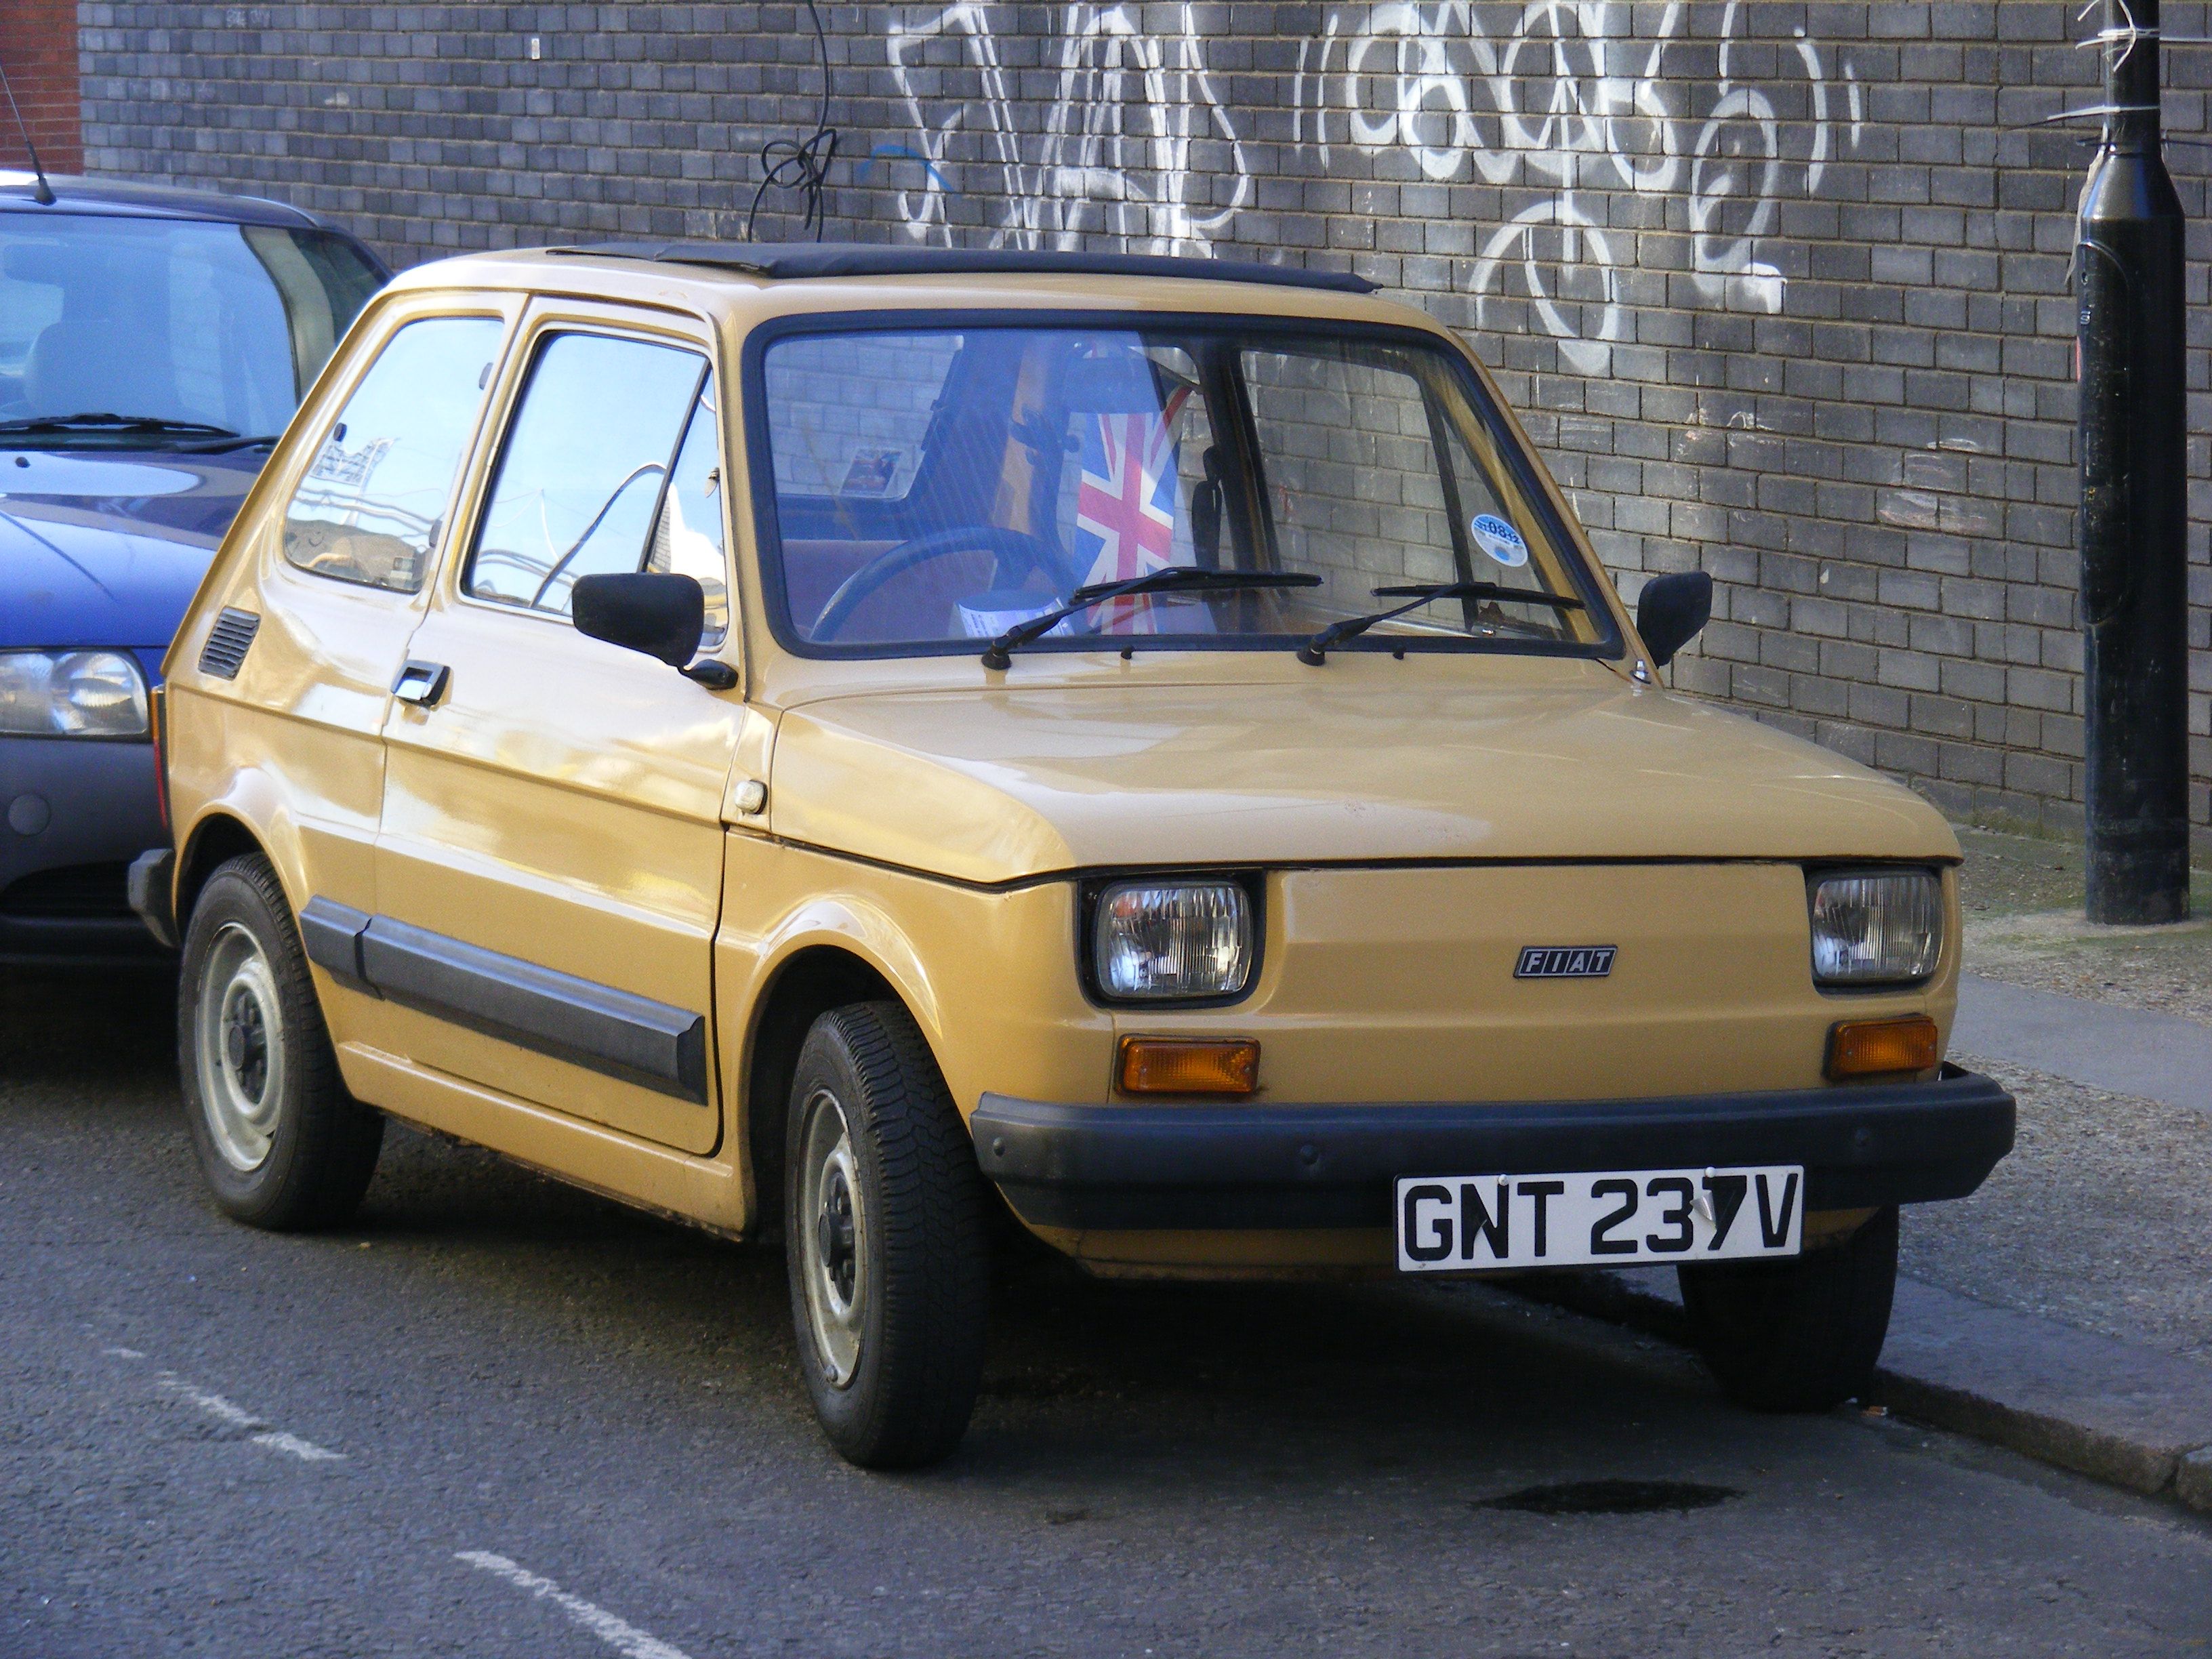 File:Fiat 126. - Flickr - sludgegulper.jpg - Wikimedia Commons